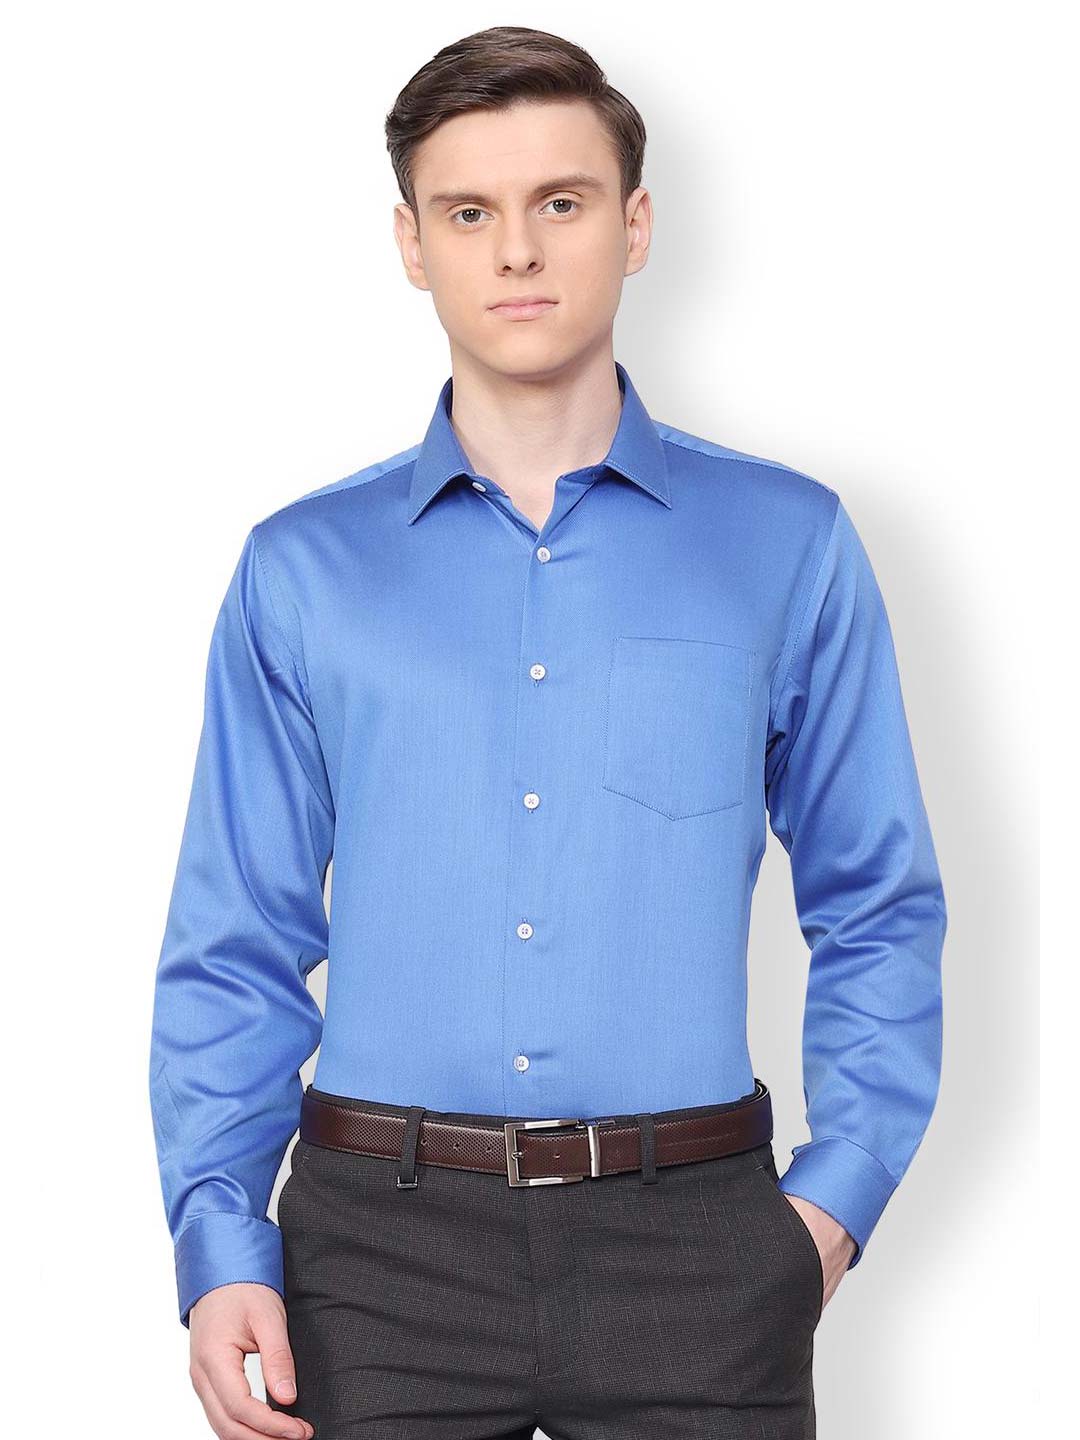 Van Heusen solid royal blue color shirt 